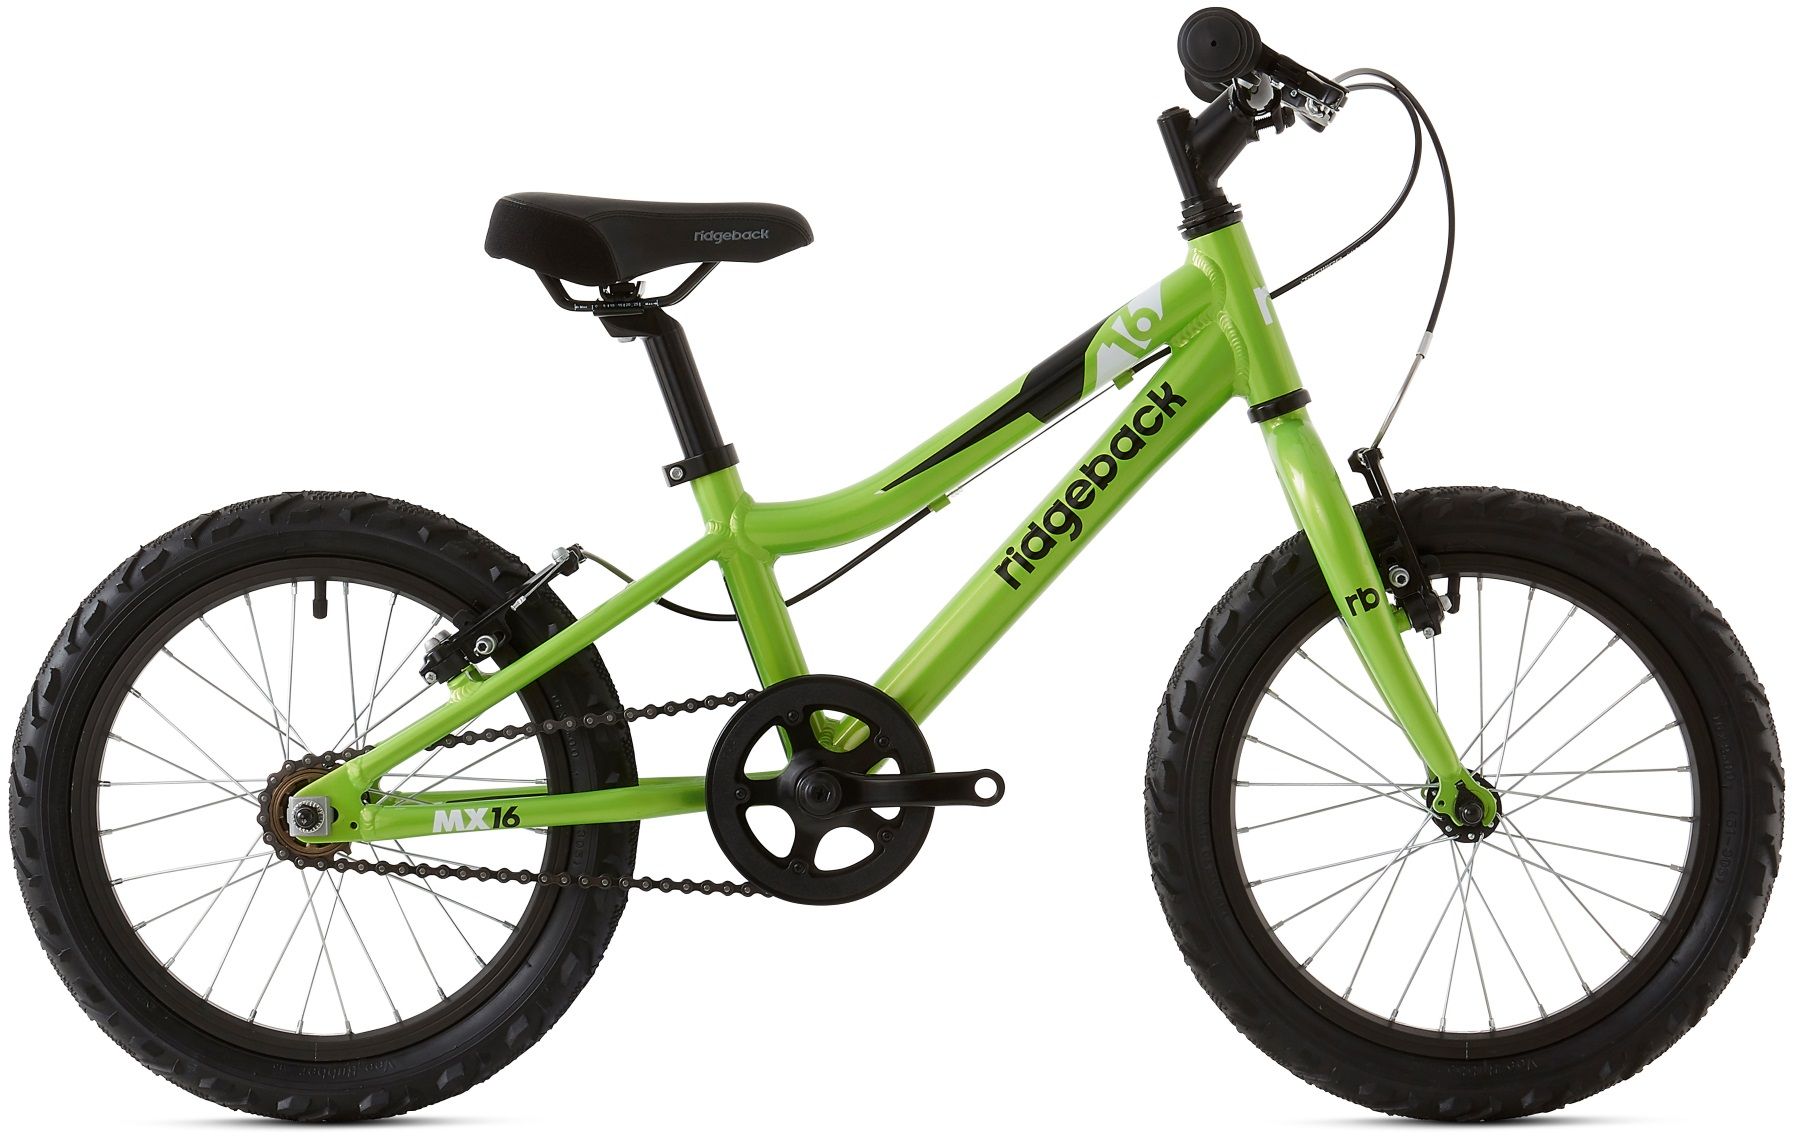 Ridgeback MX16 16-Inch 2020 Kids Bike